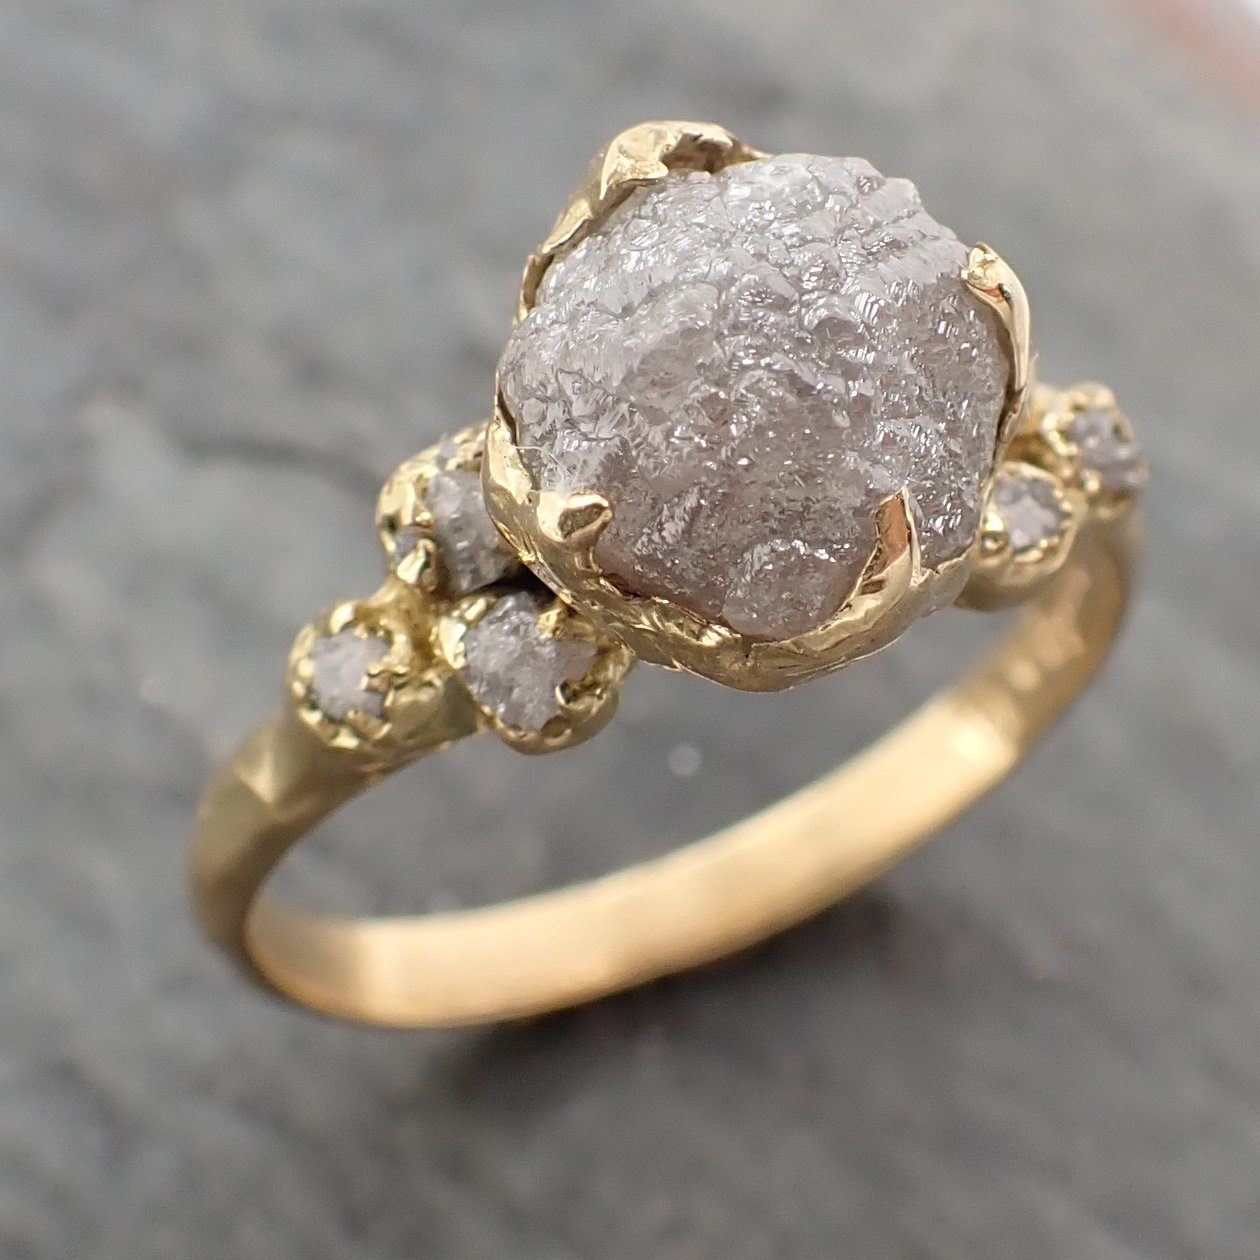 raw diamond yellow 18k gold engagement ring rough gold multi stone wedding ring diamond wedding ring rough diamond ring byangeline 2251 Alternative Engagement